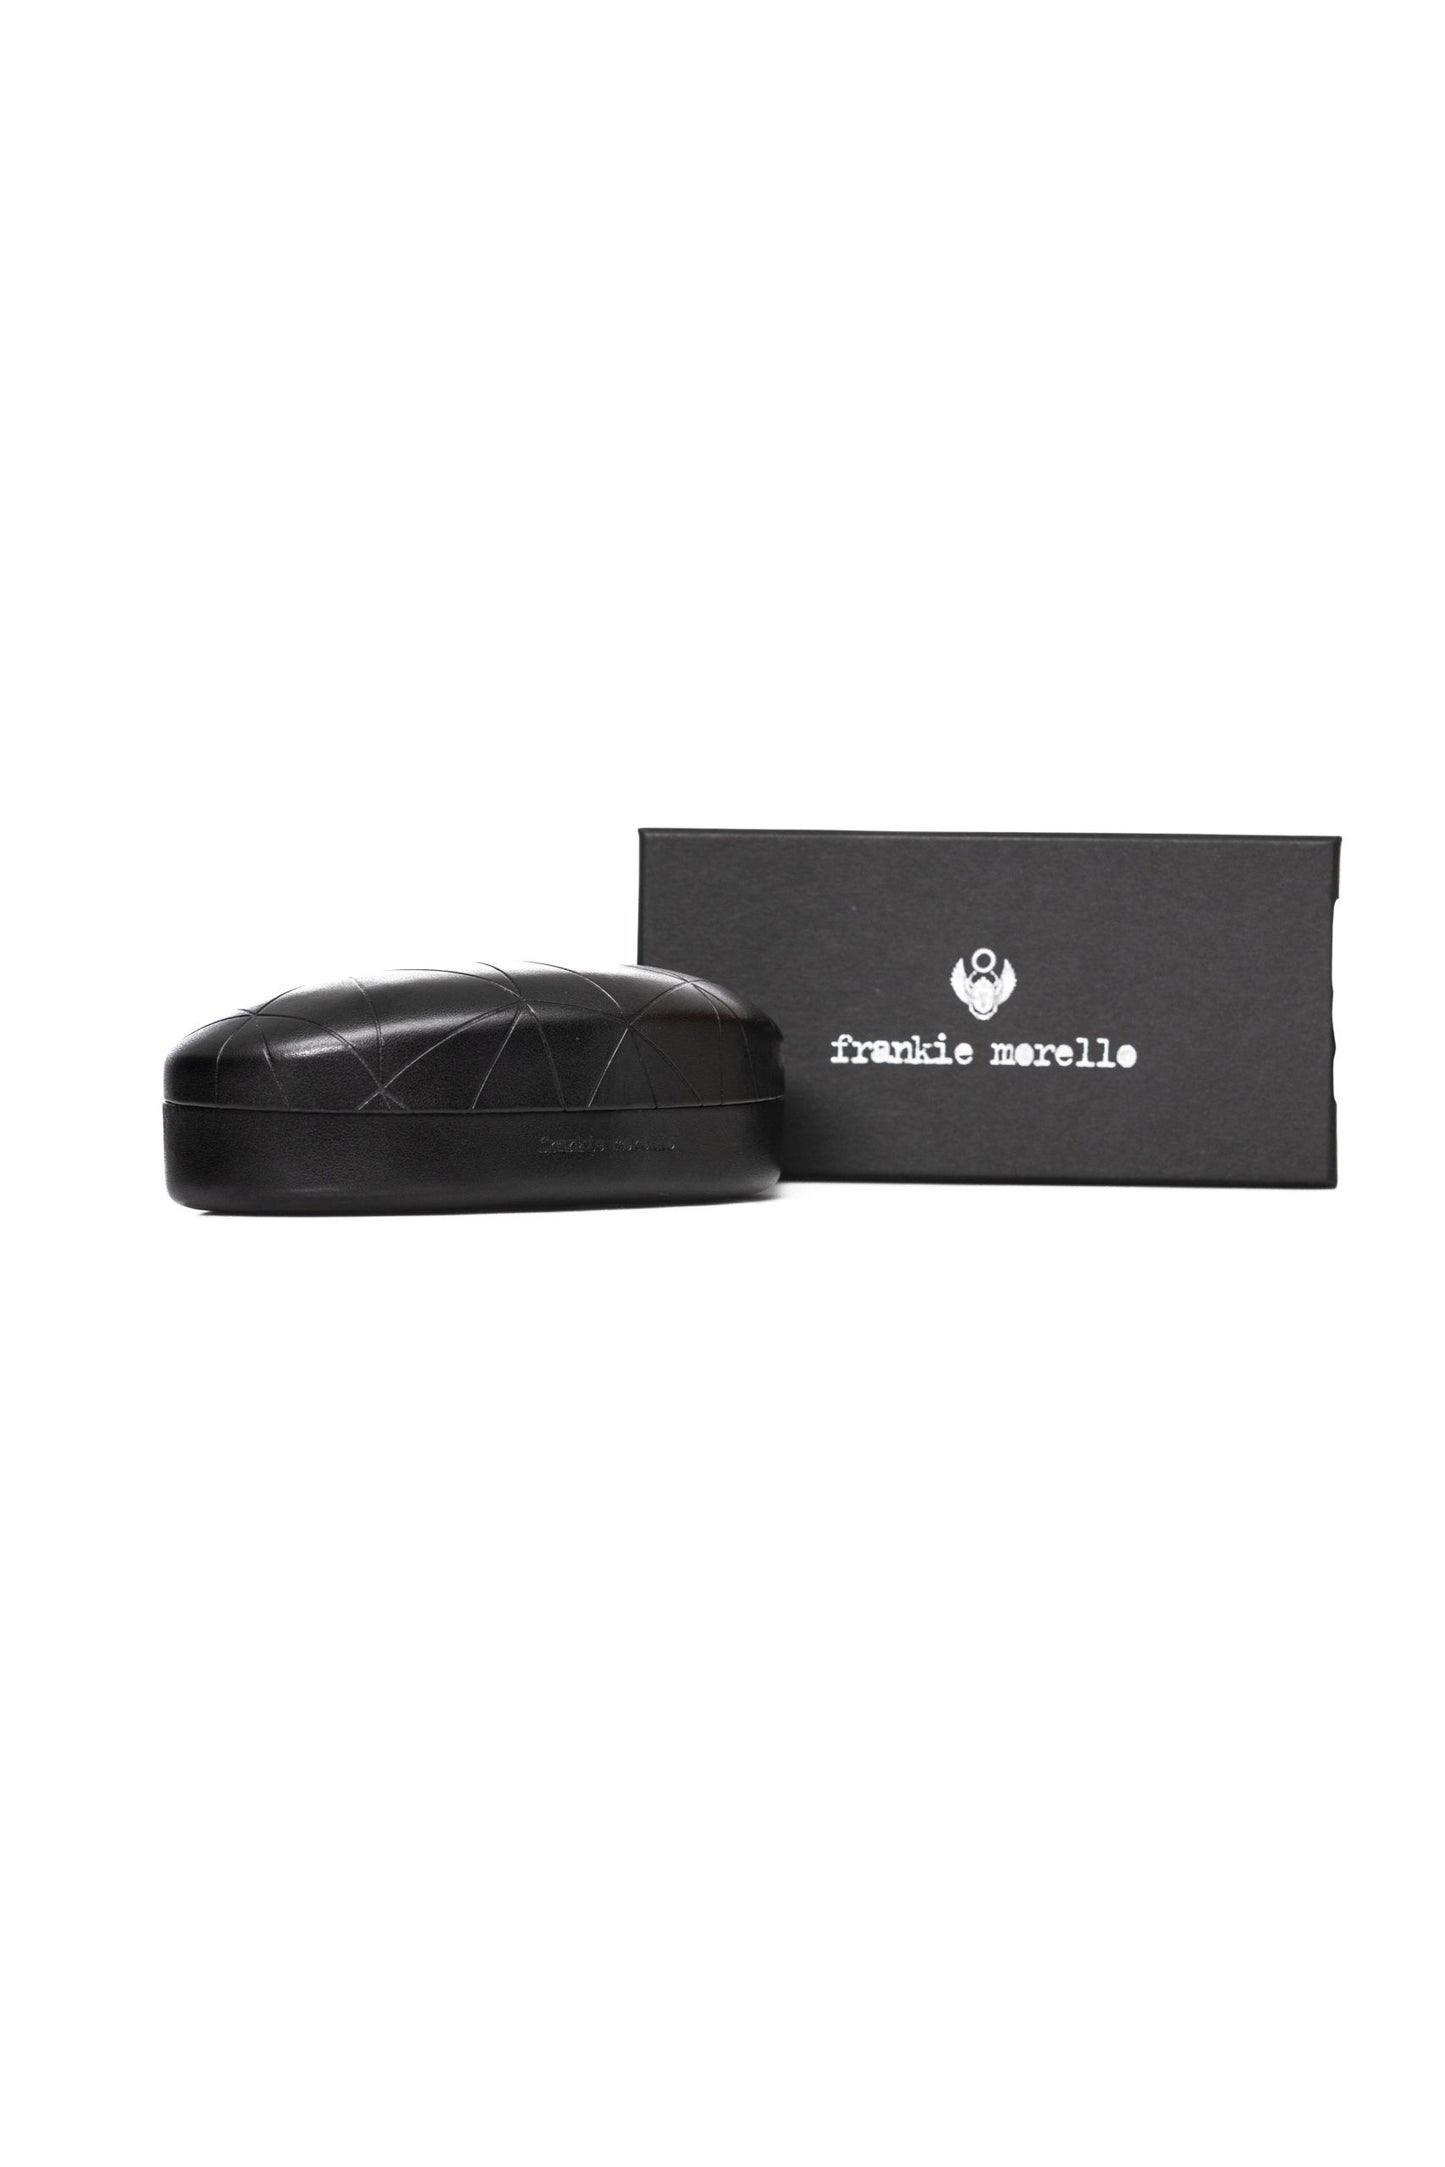 Frankie Morello Chic Shield Smoke Gray Lens Sunglasses